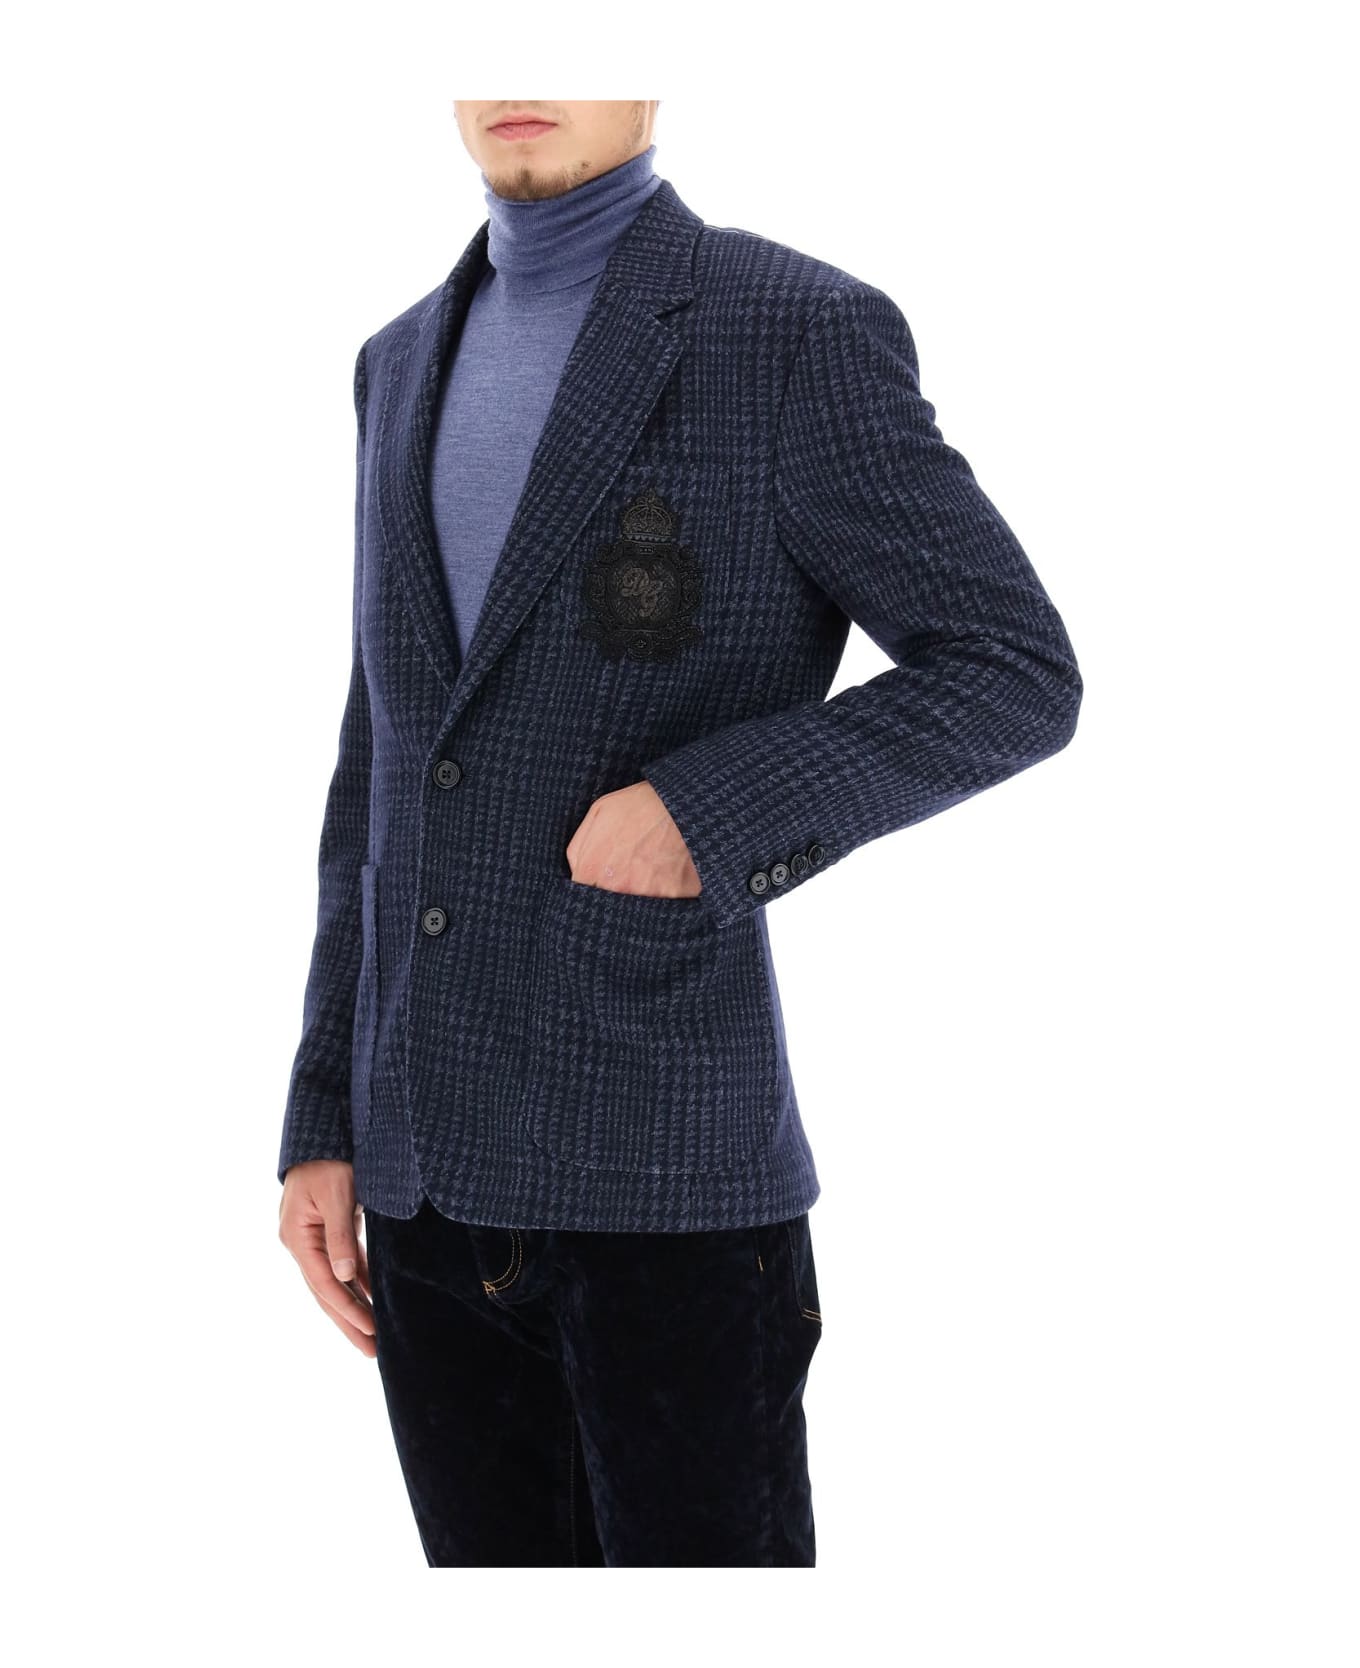 Dolce & Gabbana Tailored Blazer In Tartan Wool - Blu/grigio ブレザー